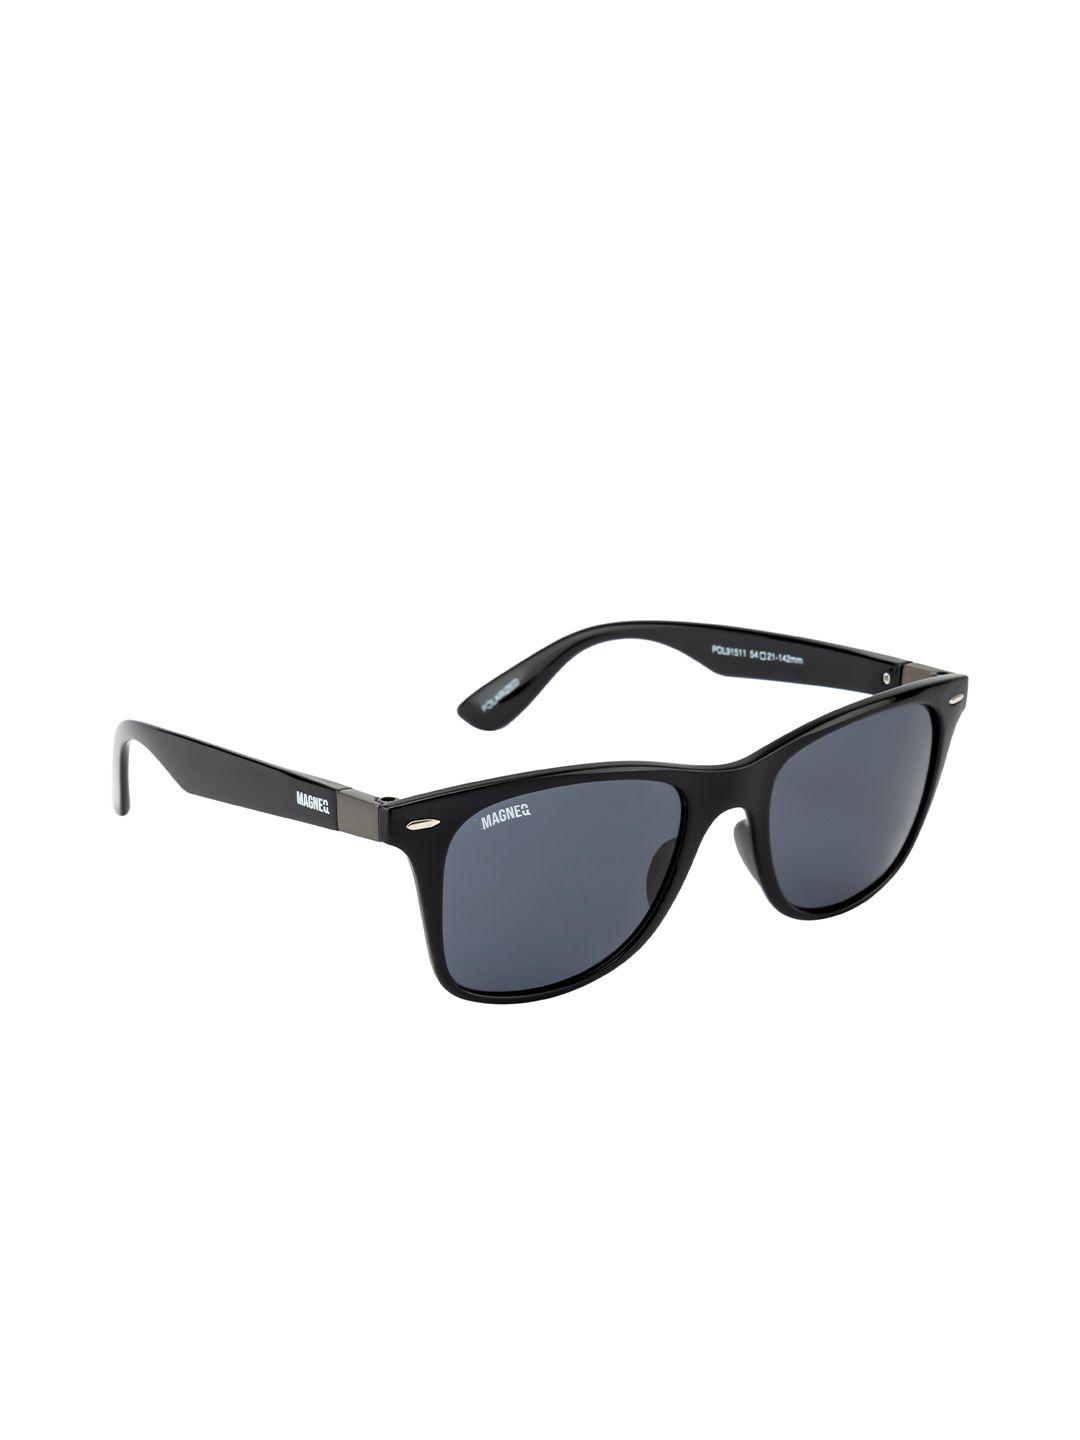 magneq lens & wayfarer sunglasses with polarised & uv protected lens mg 91511/s c1 5421